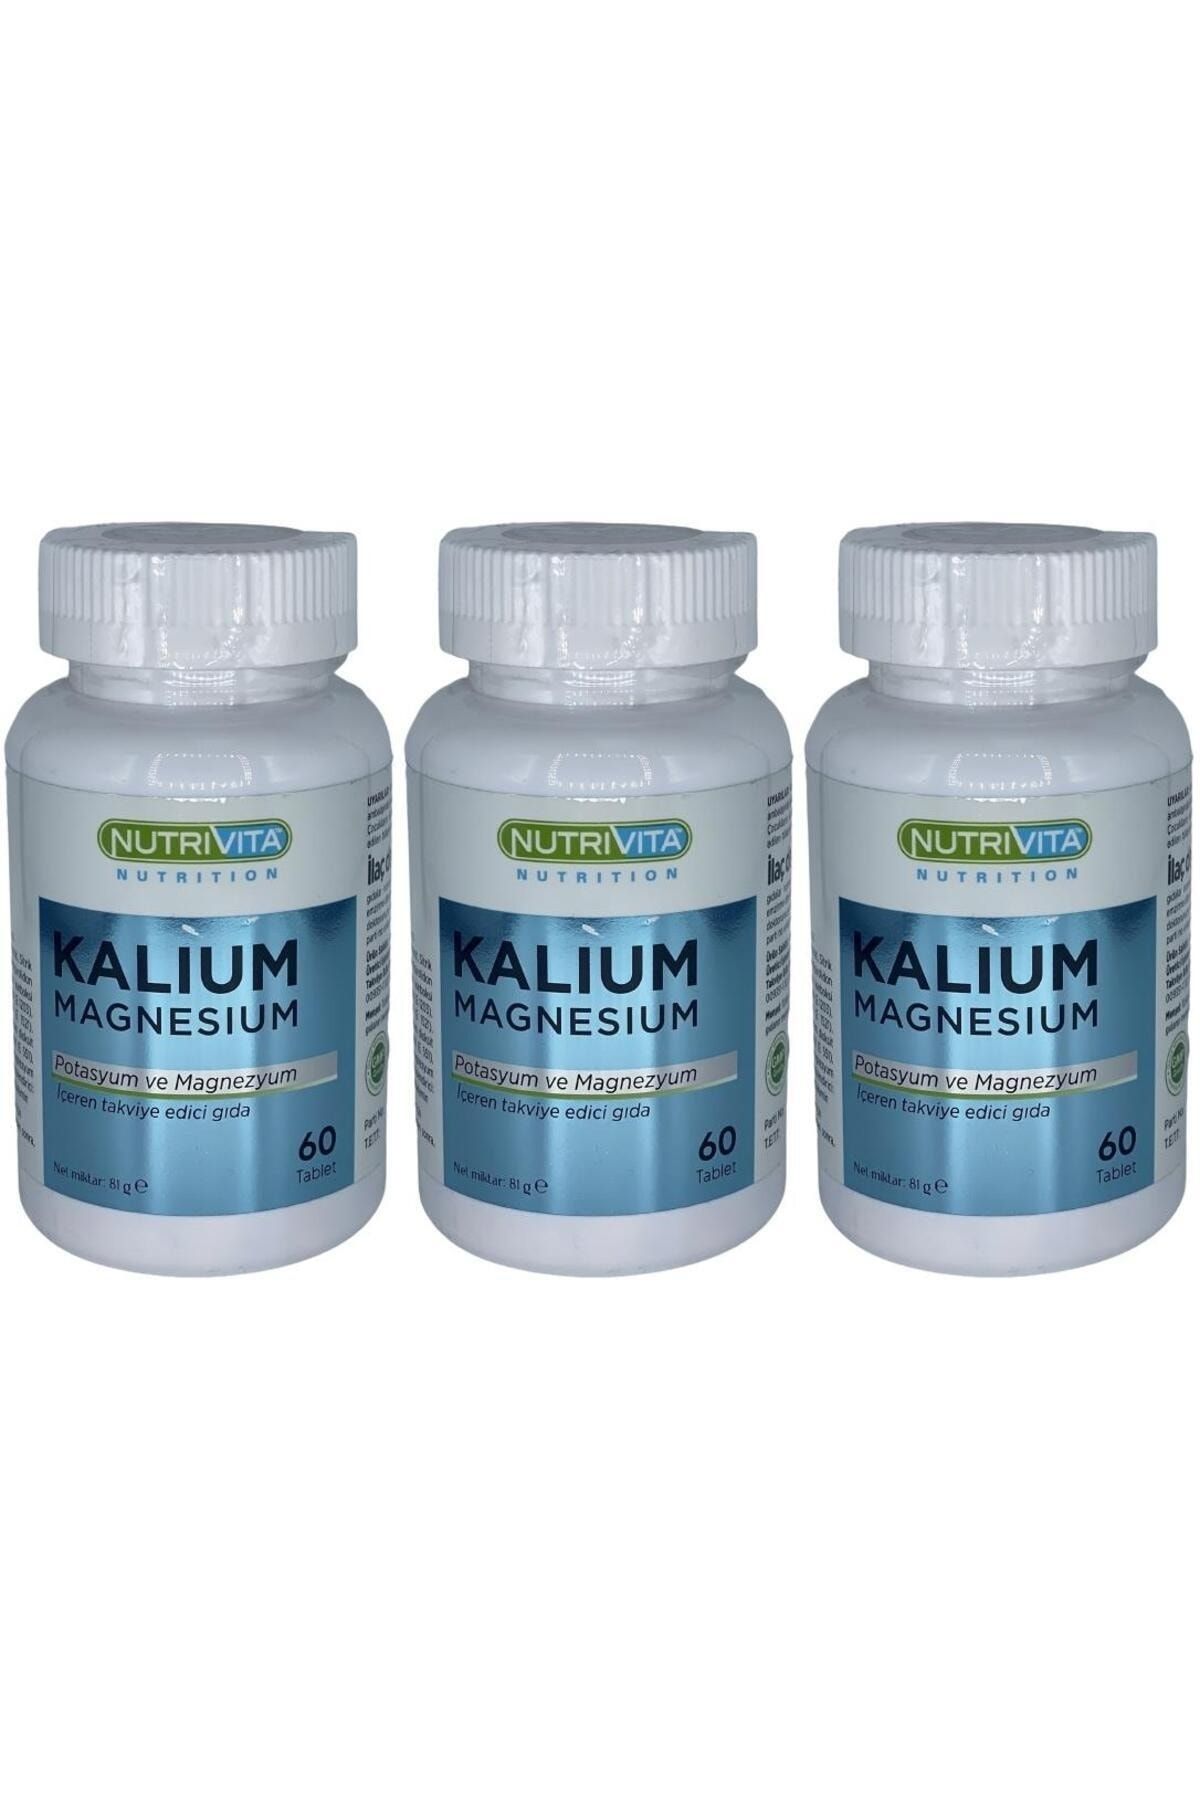 Nutrivita Nutrition Kalium Magnesium 3x60 Tablet Potasyum Magnezyum Çinko Demir Vitamin B6 B12 Iron